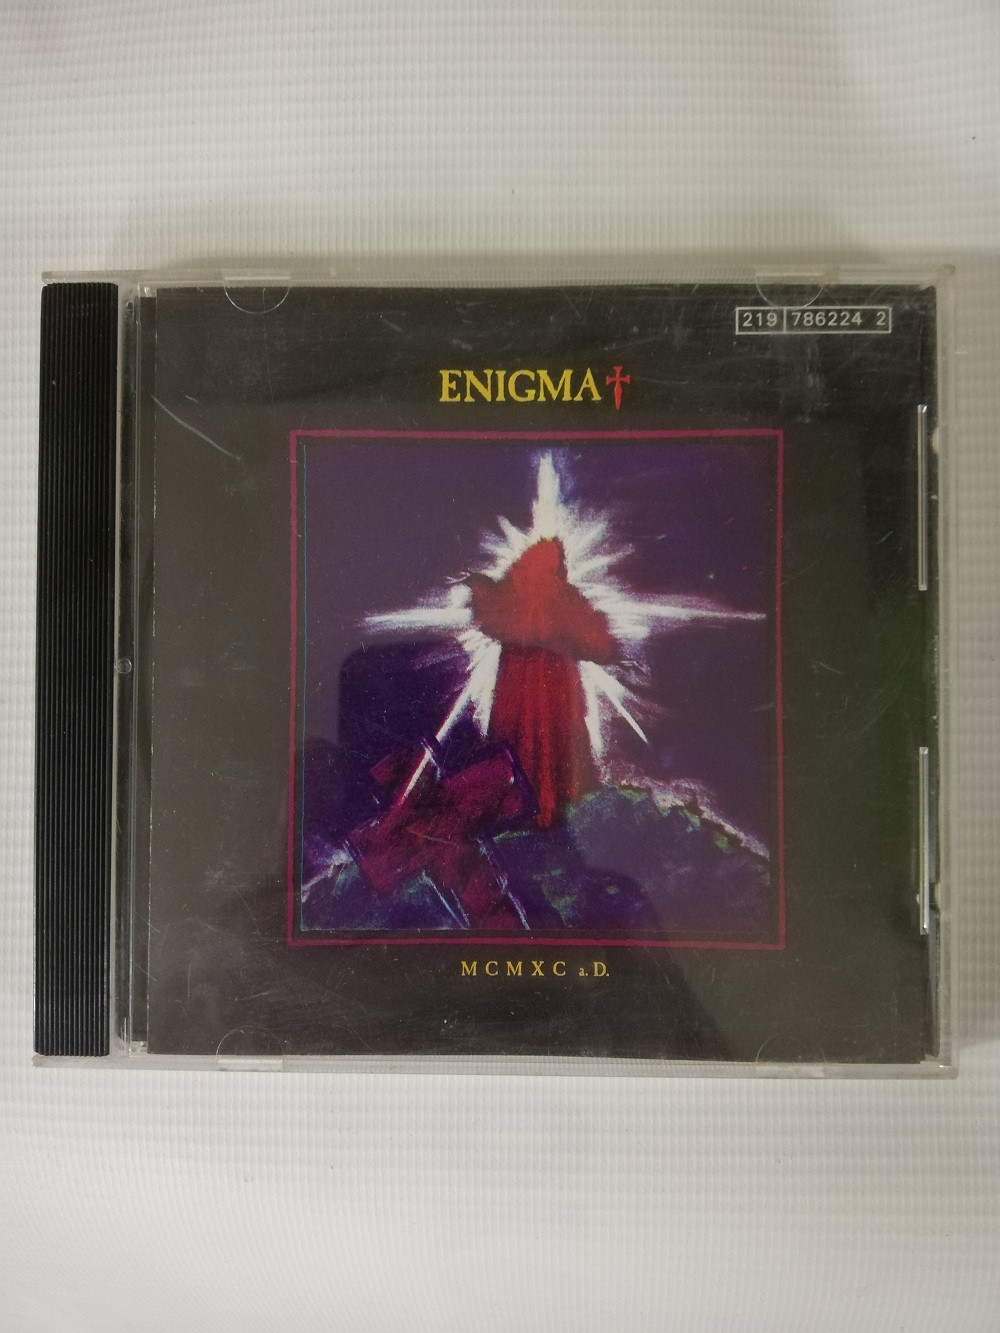 Imagen CD ENIGMA - MCMXC  a.D. 1